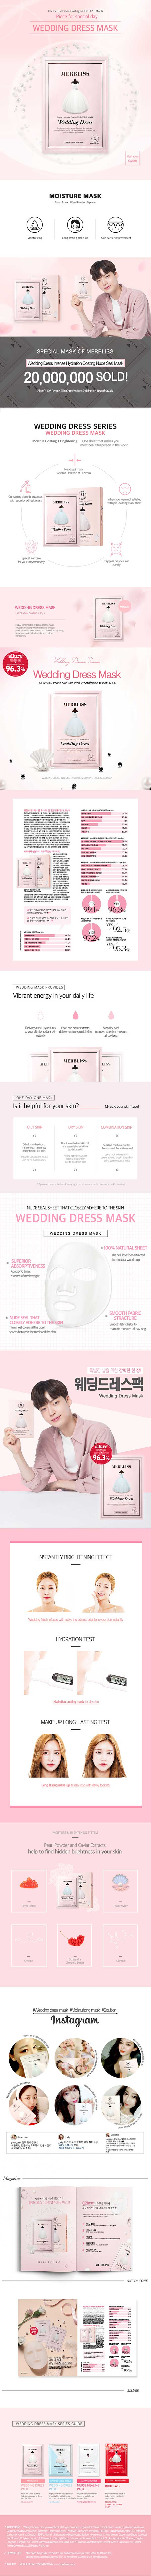 Bolehshop - Merbliss Wedding Dress Mask Intense Hydration Coating Nude Seal Mask Sheet